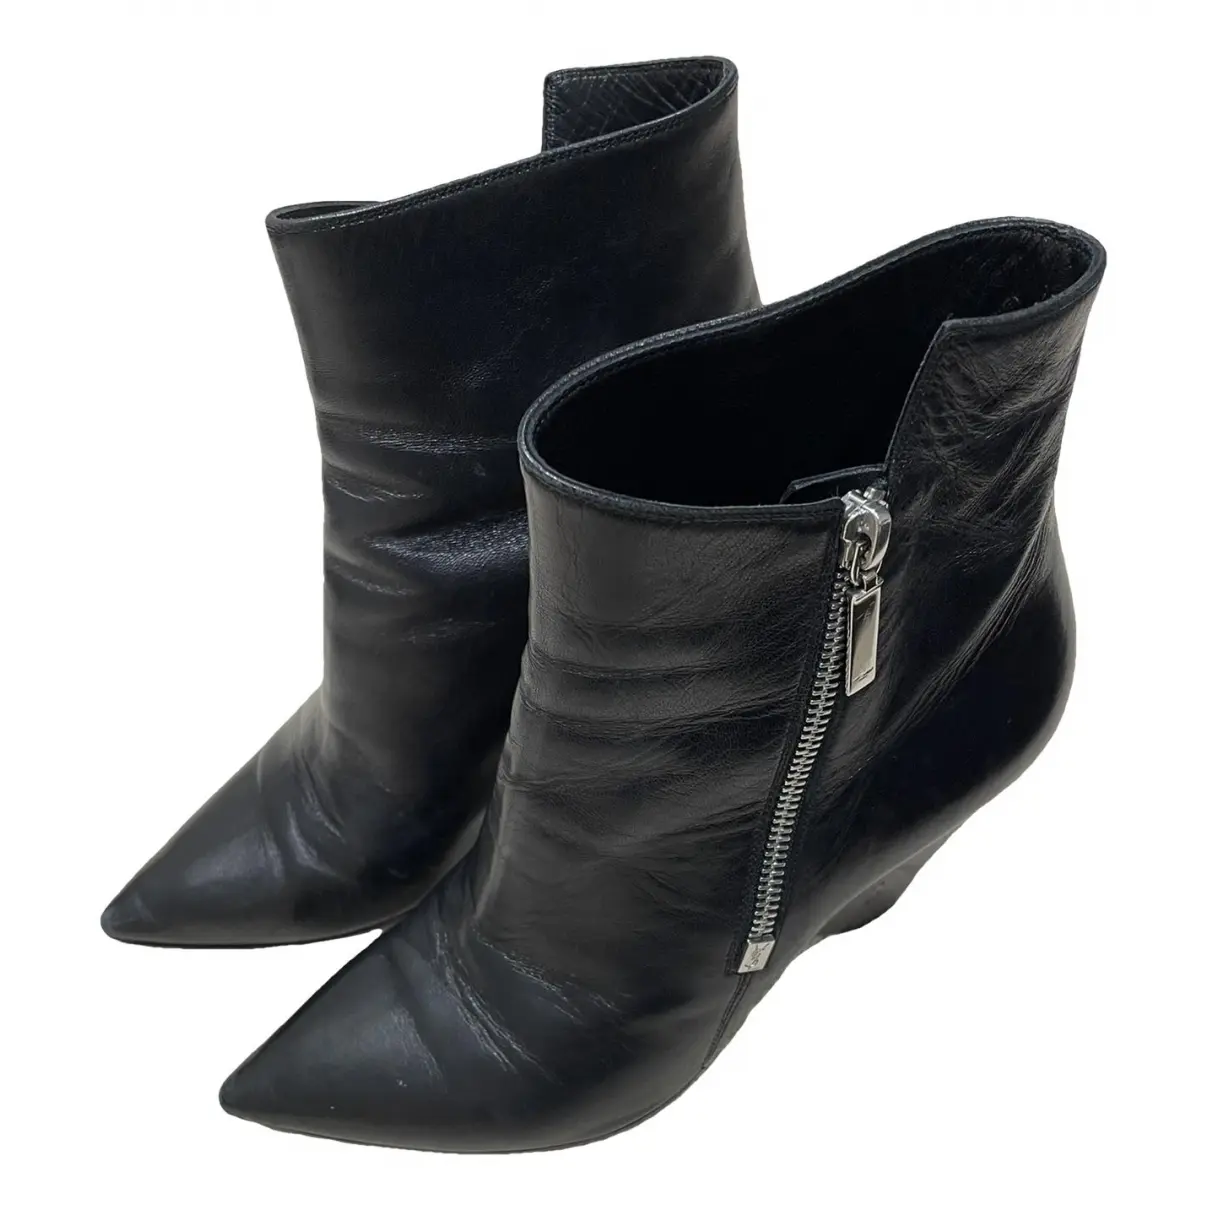 Niki leather boots